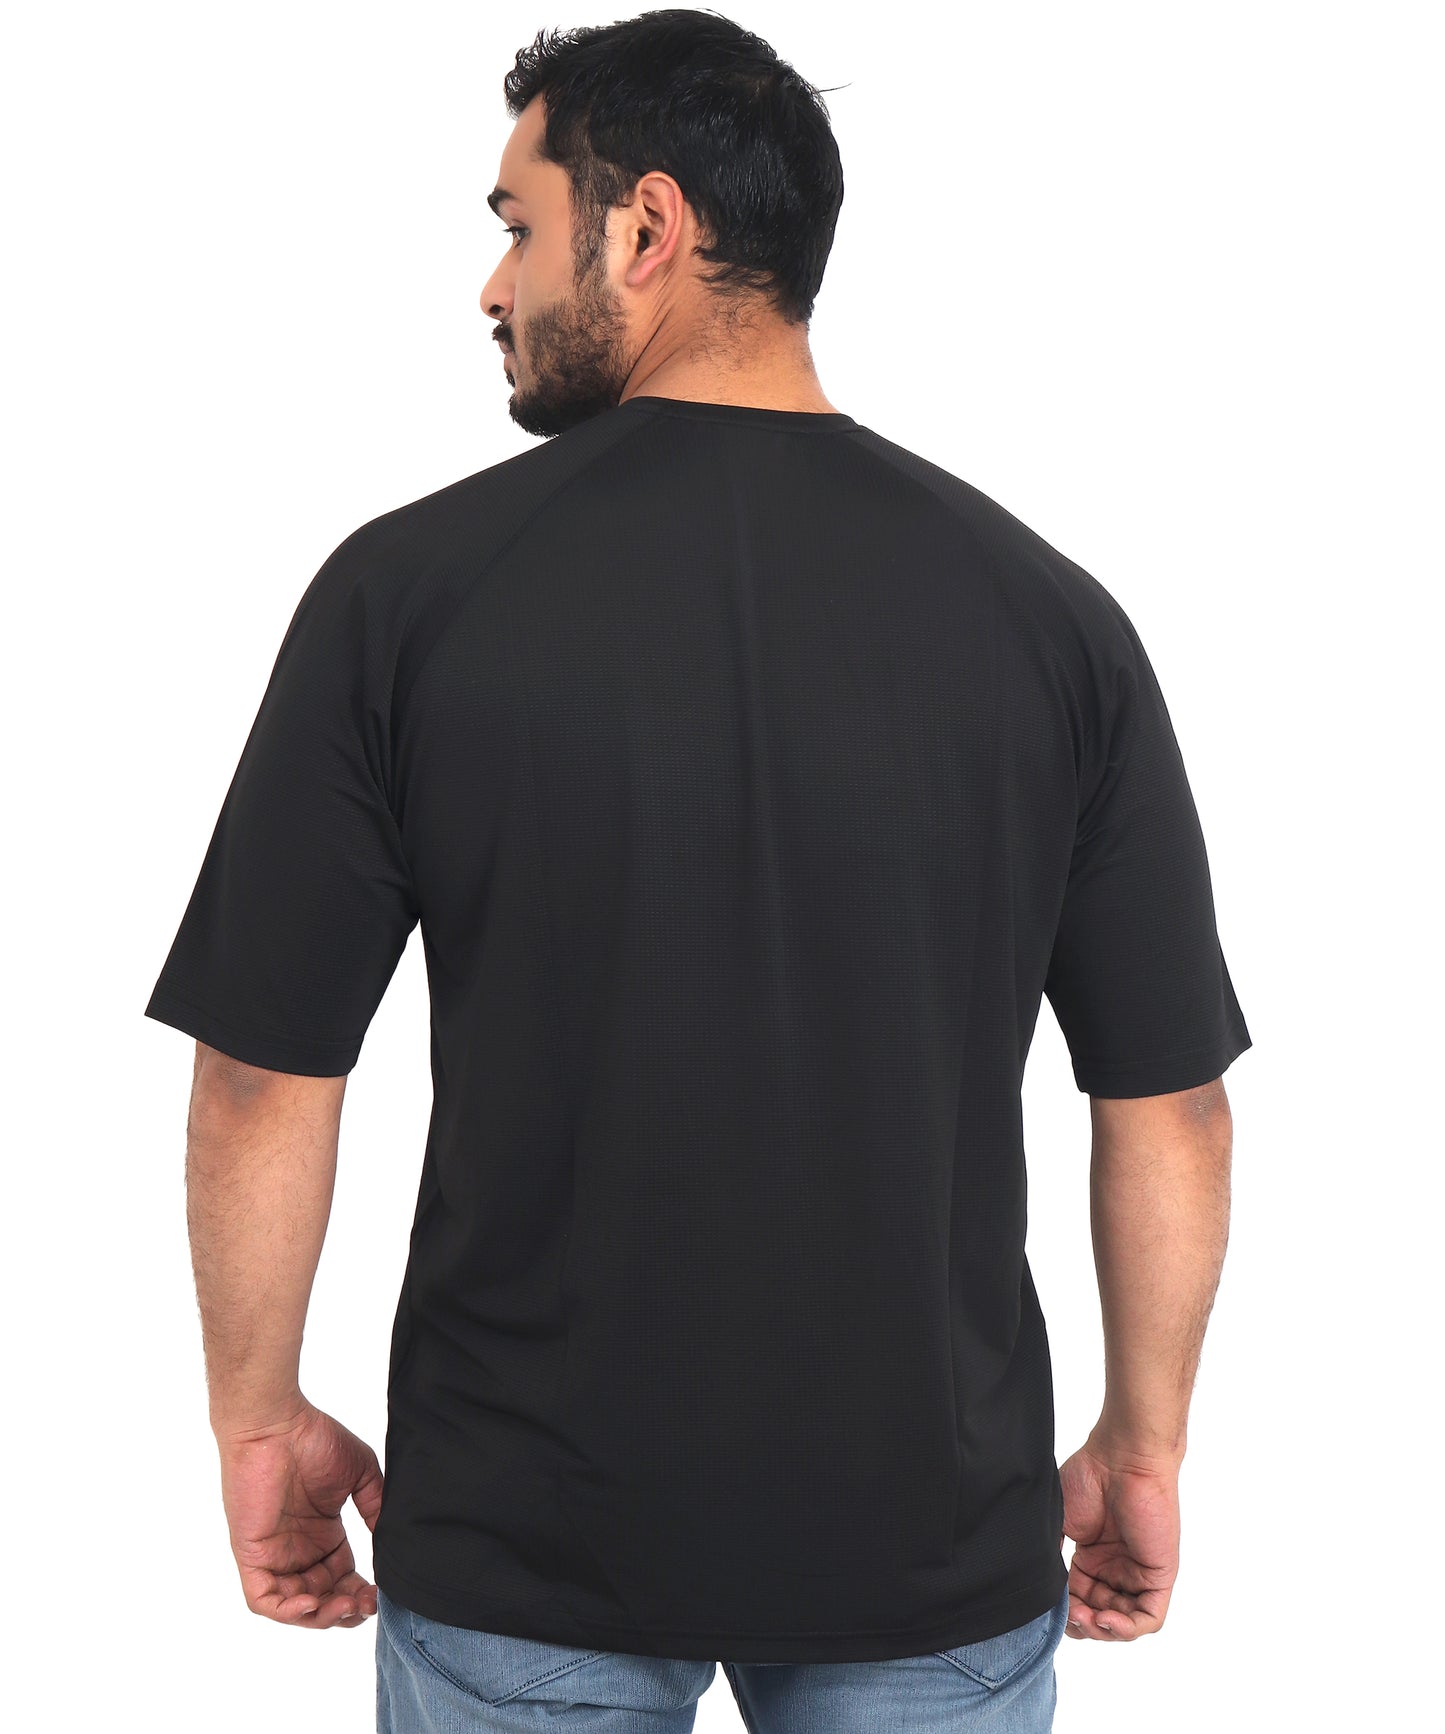 Men's Oversized T-Shirt Plain Black Drop Shoulder T shirt for Men - Triple Dot Clothings